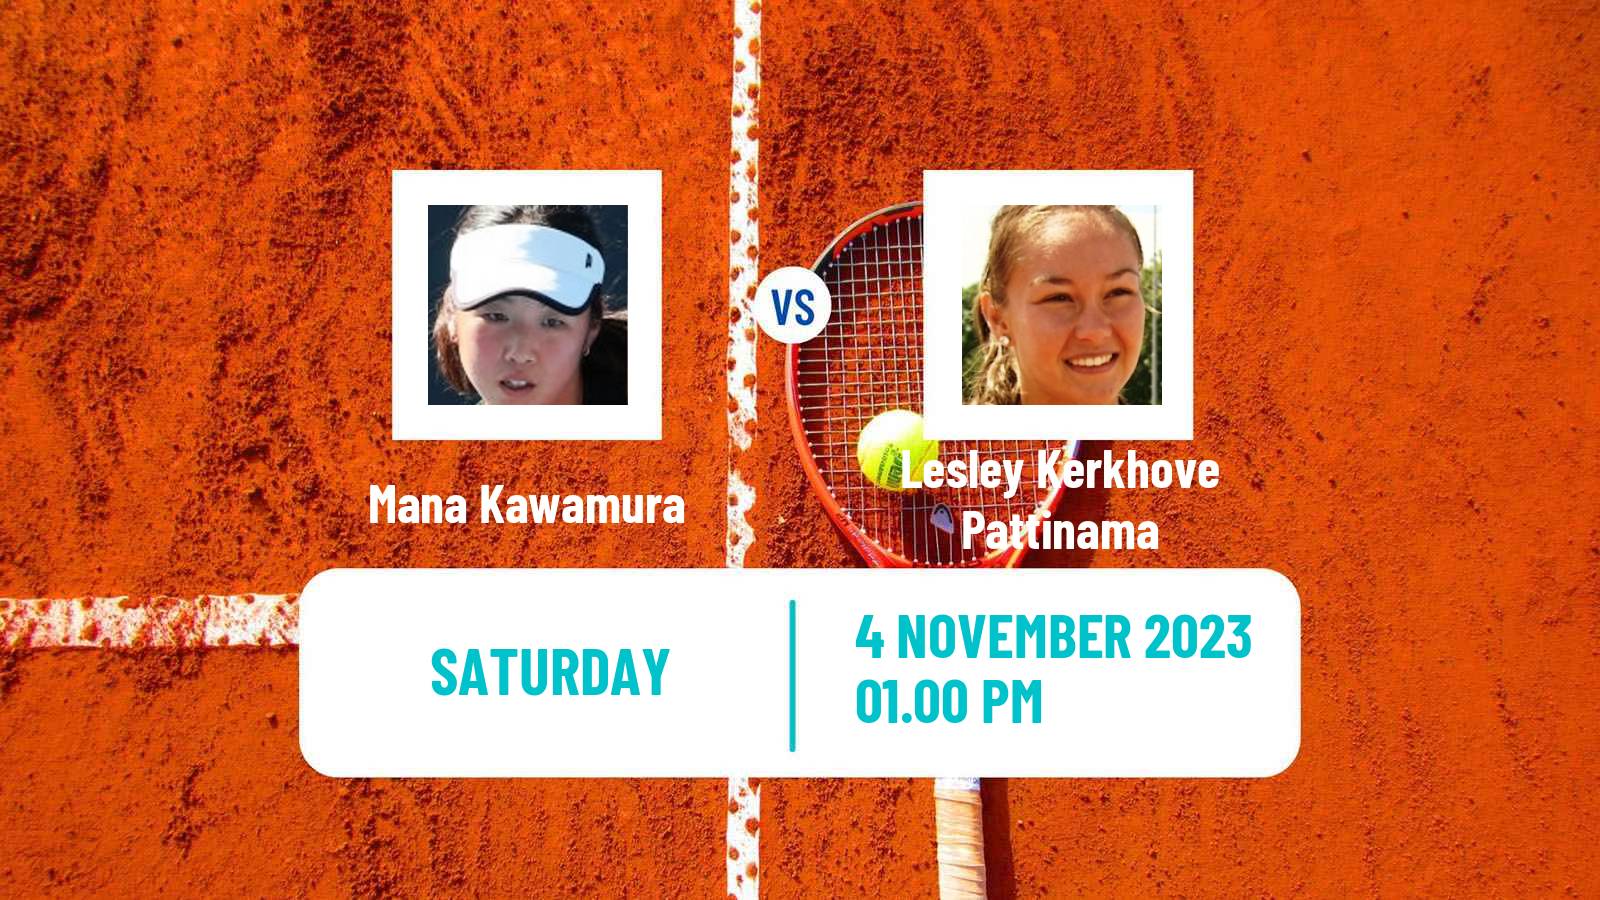 Tennis ITF W25 Edmonton Women Mana Kawamura - Lesley Kerkhove Pattinama